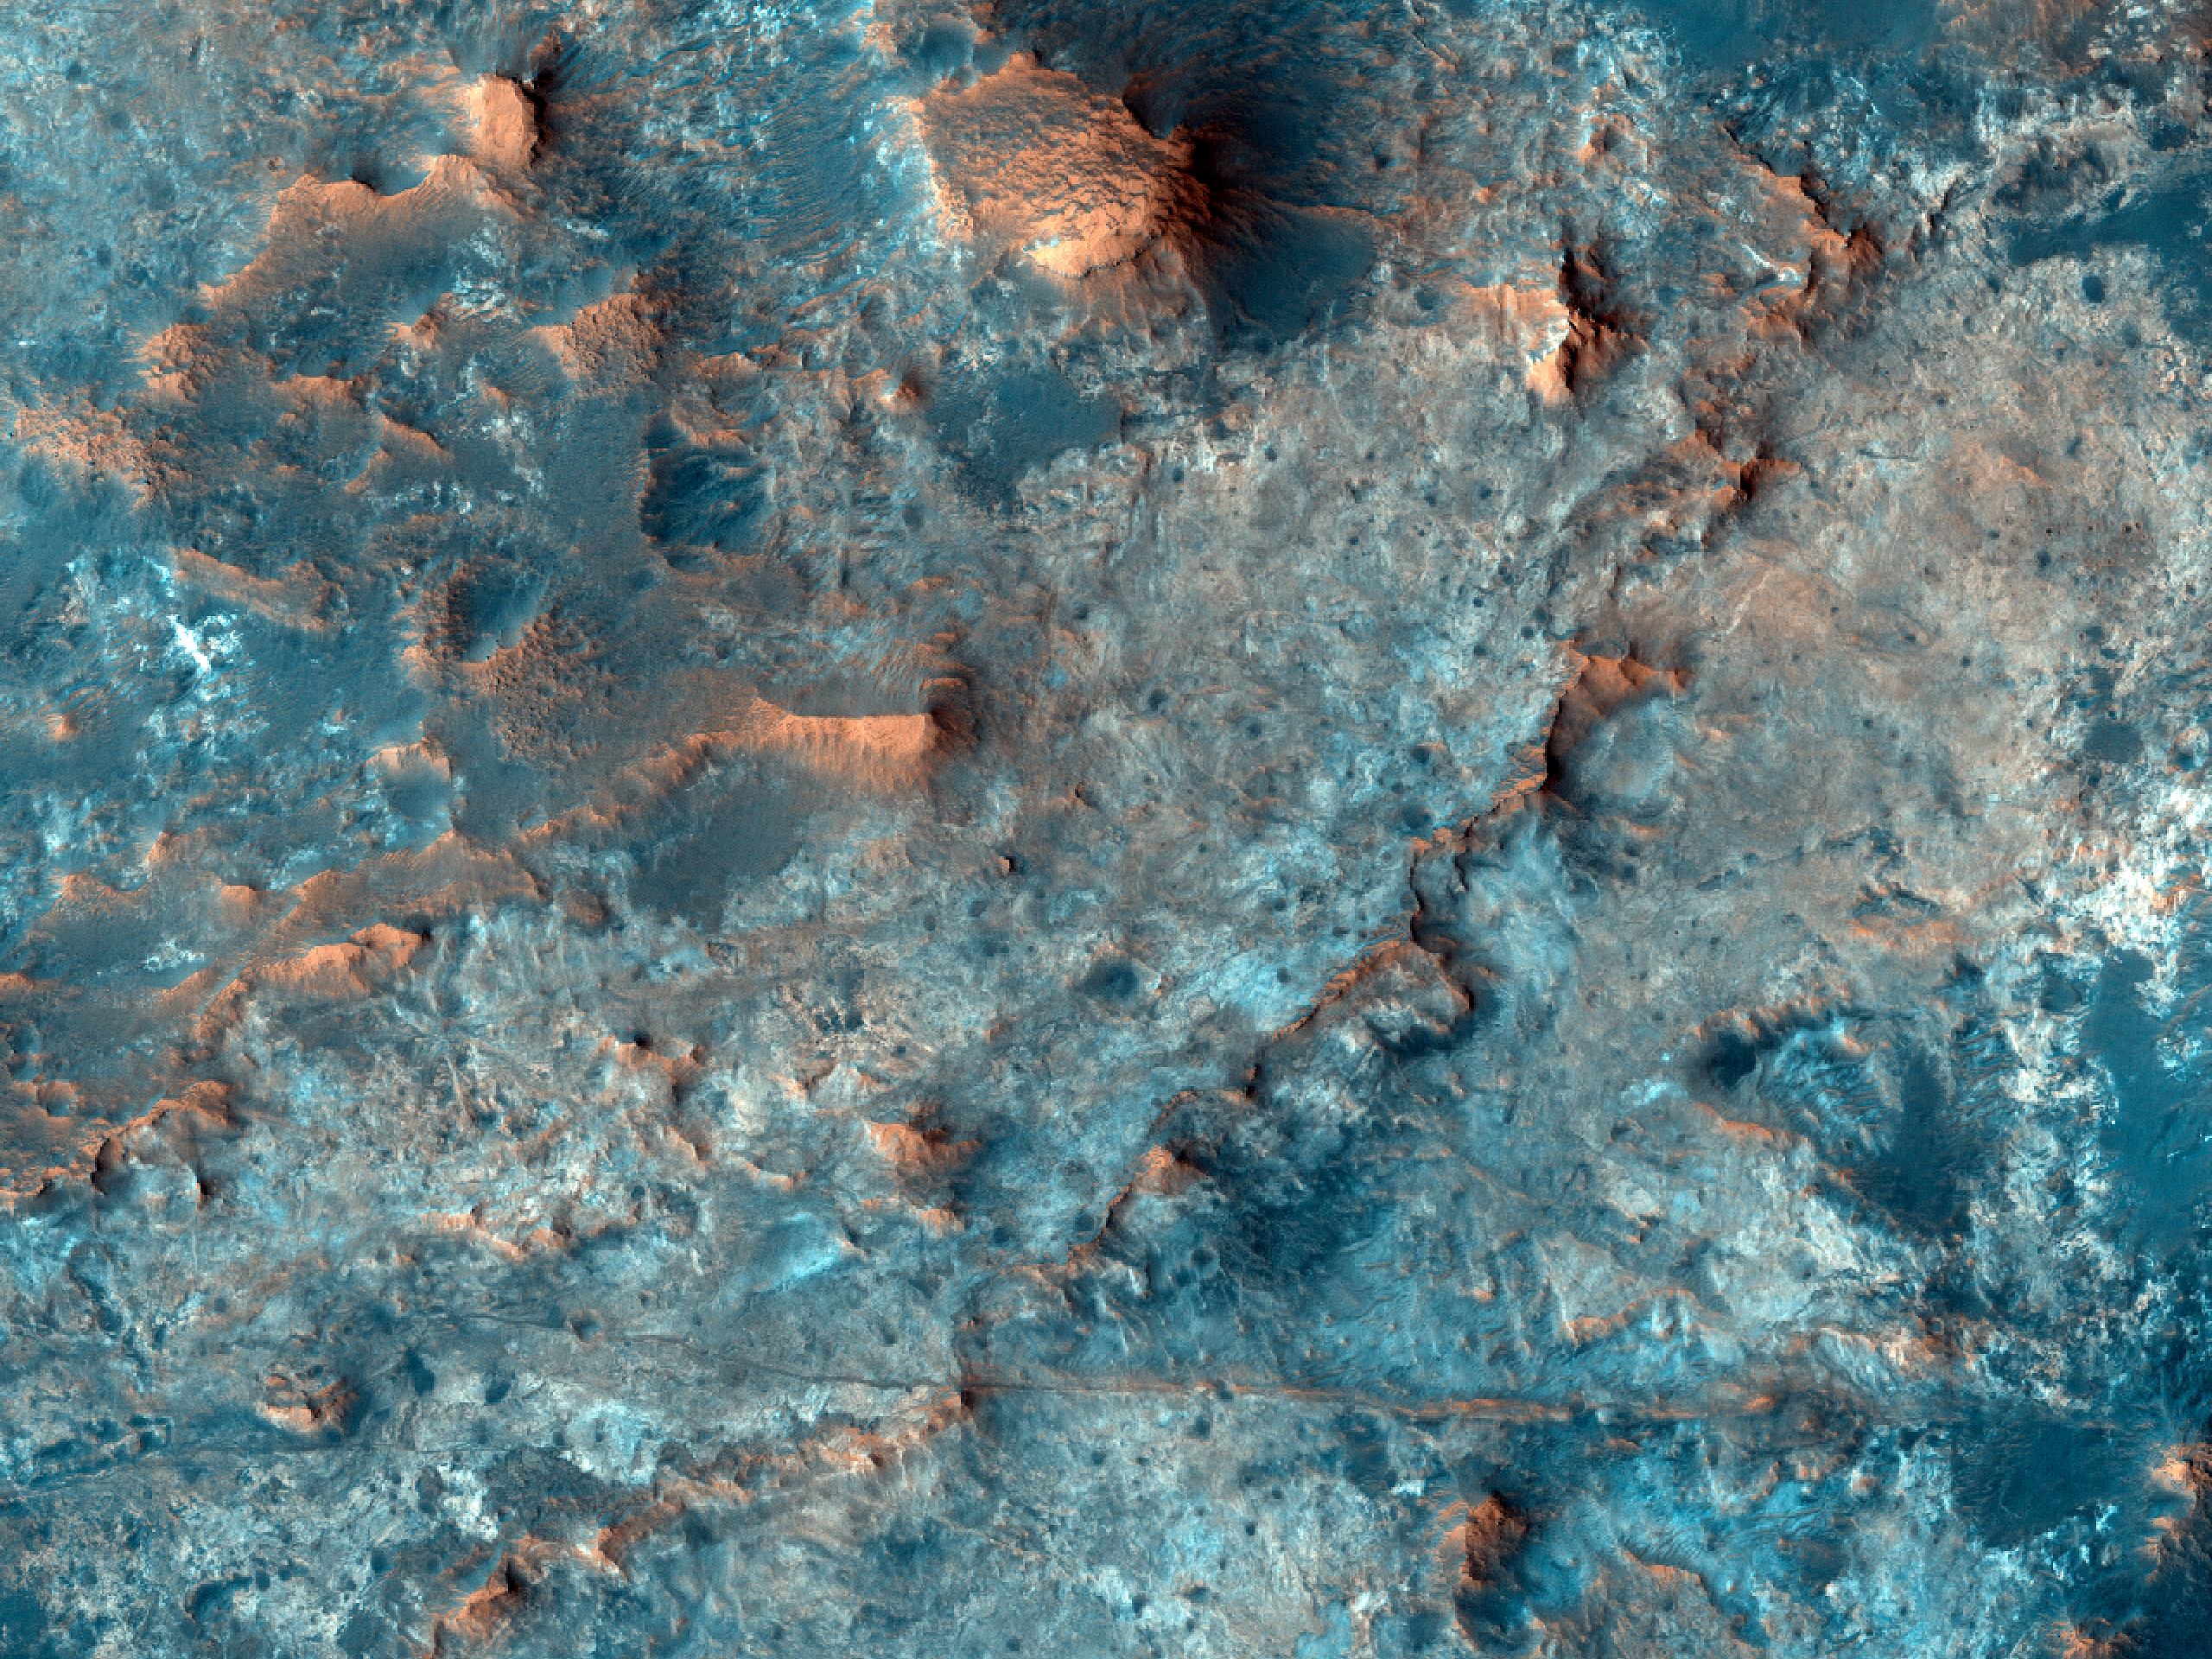 A Candidate ExoMars Landing Site in Mawrth Vallis